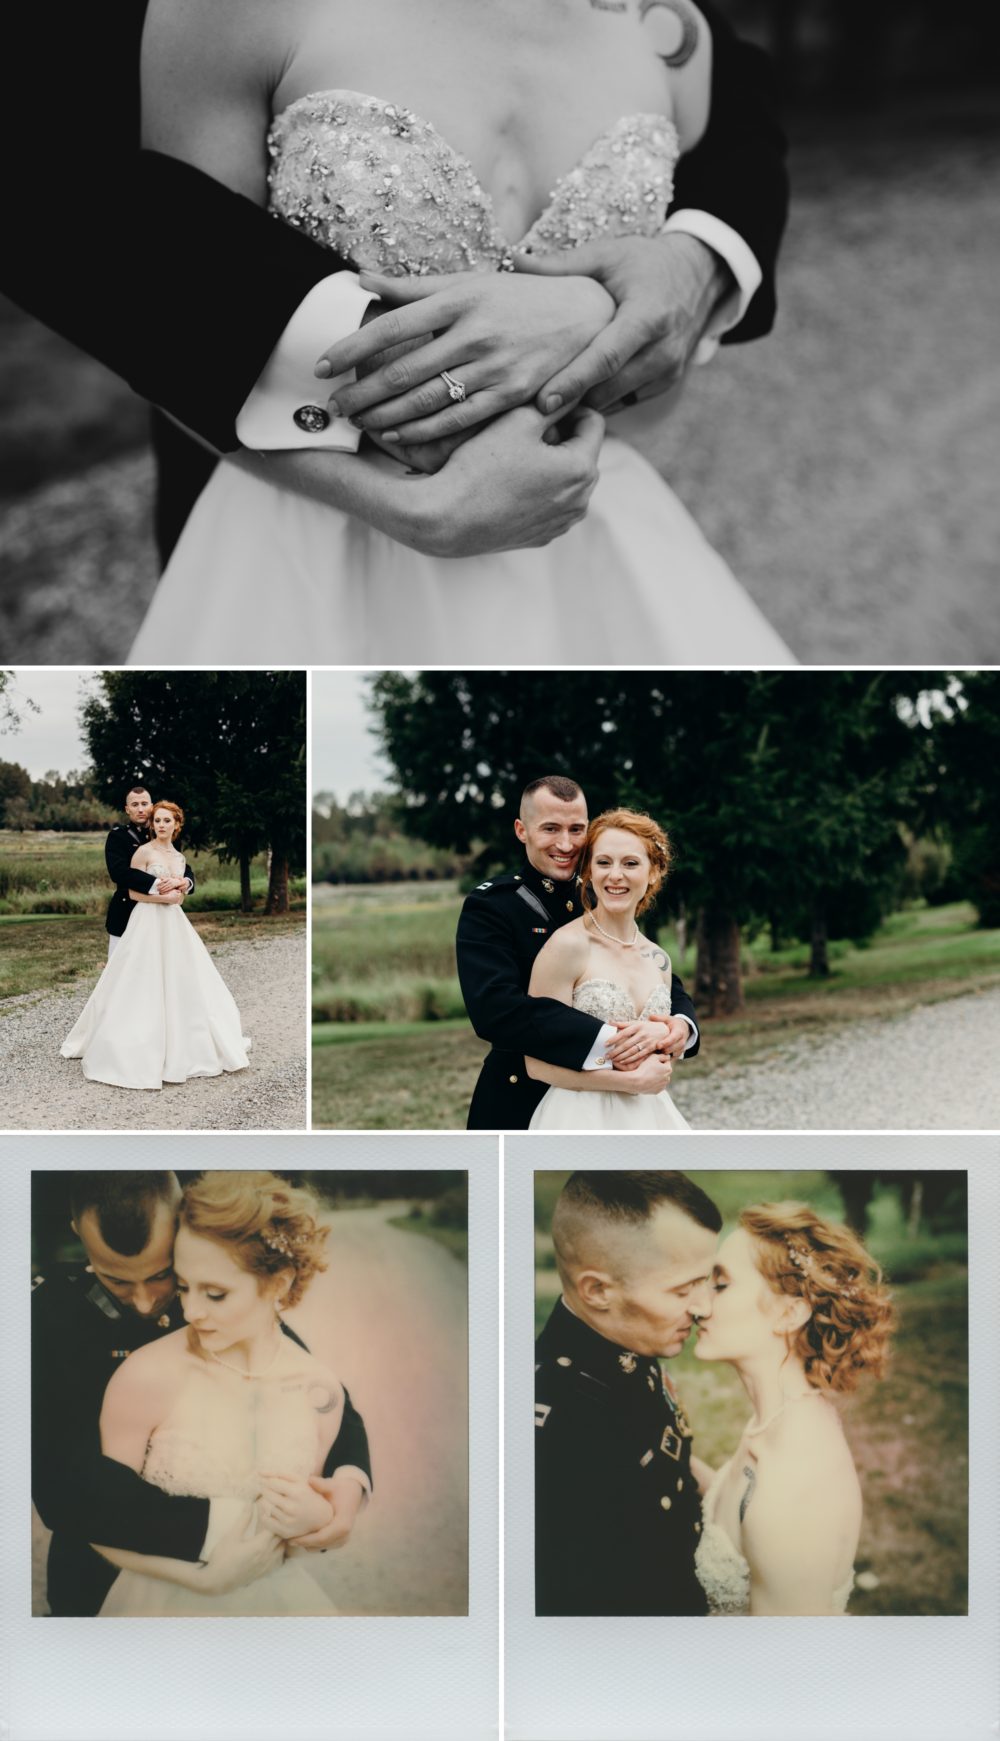 Polaroids and bridal portraits - Bostic Lake Ranch Wedding in Redmond, WA by Briana Morrison